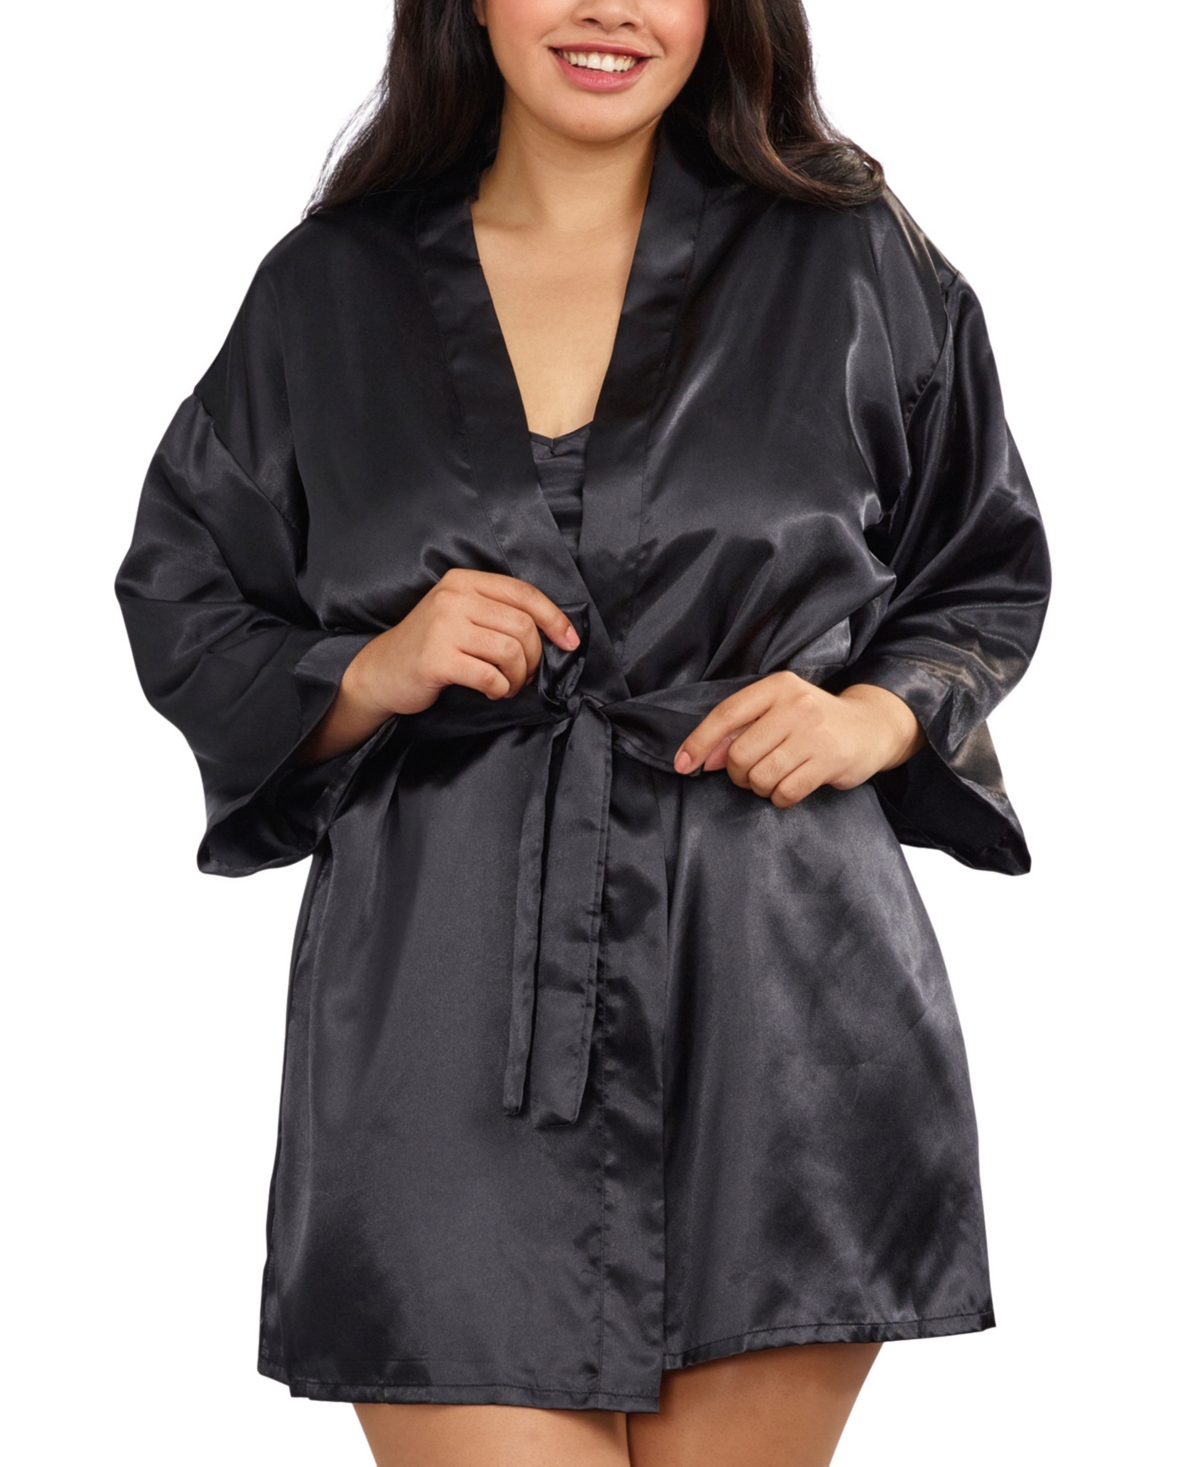 Plus Size Satin Robe & Chemise 2pc Lingerie Set - Black